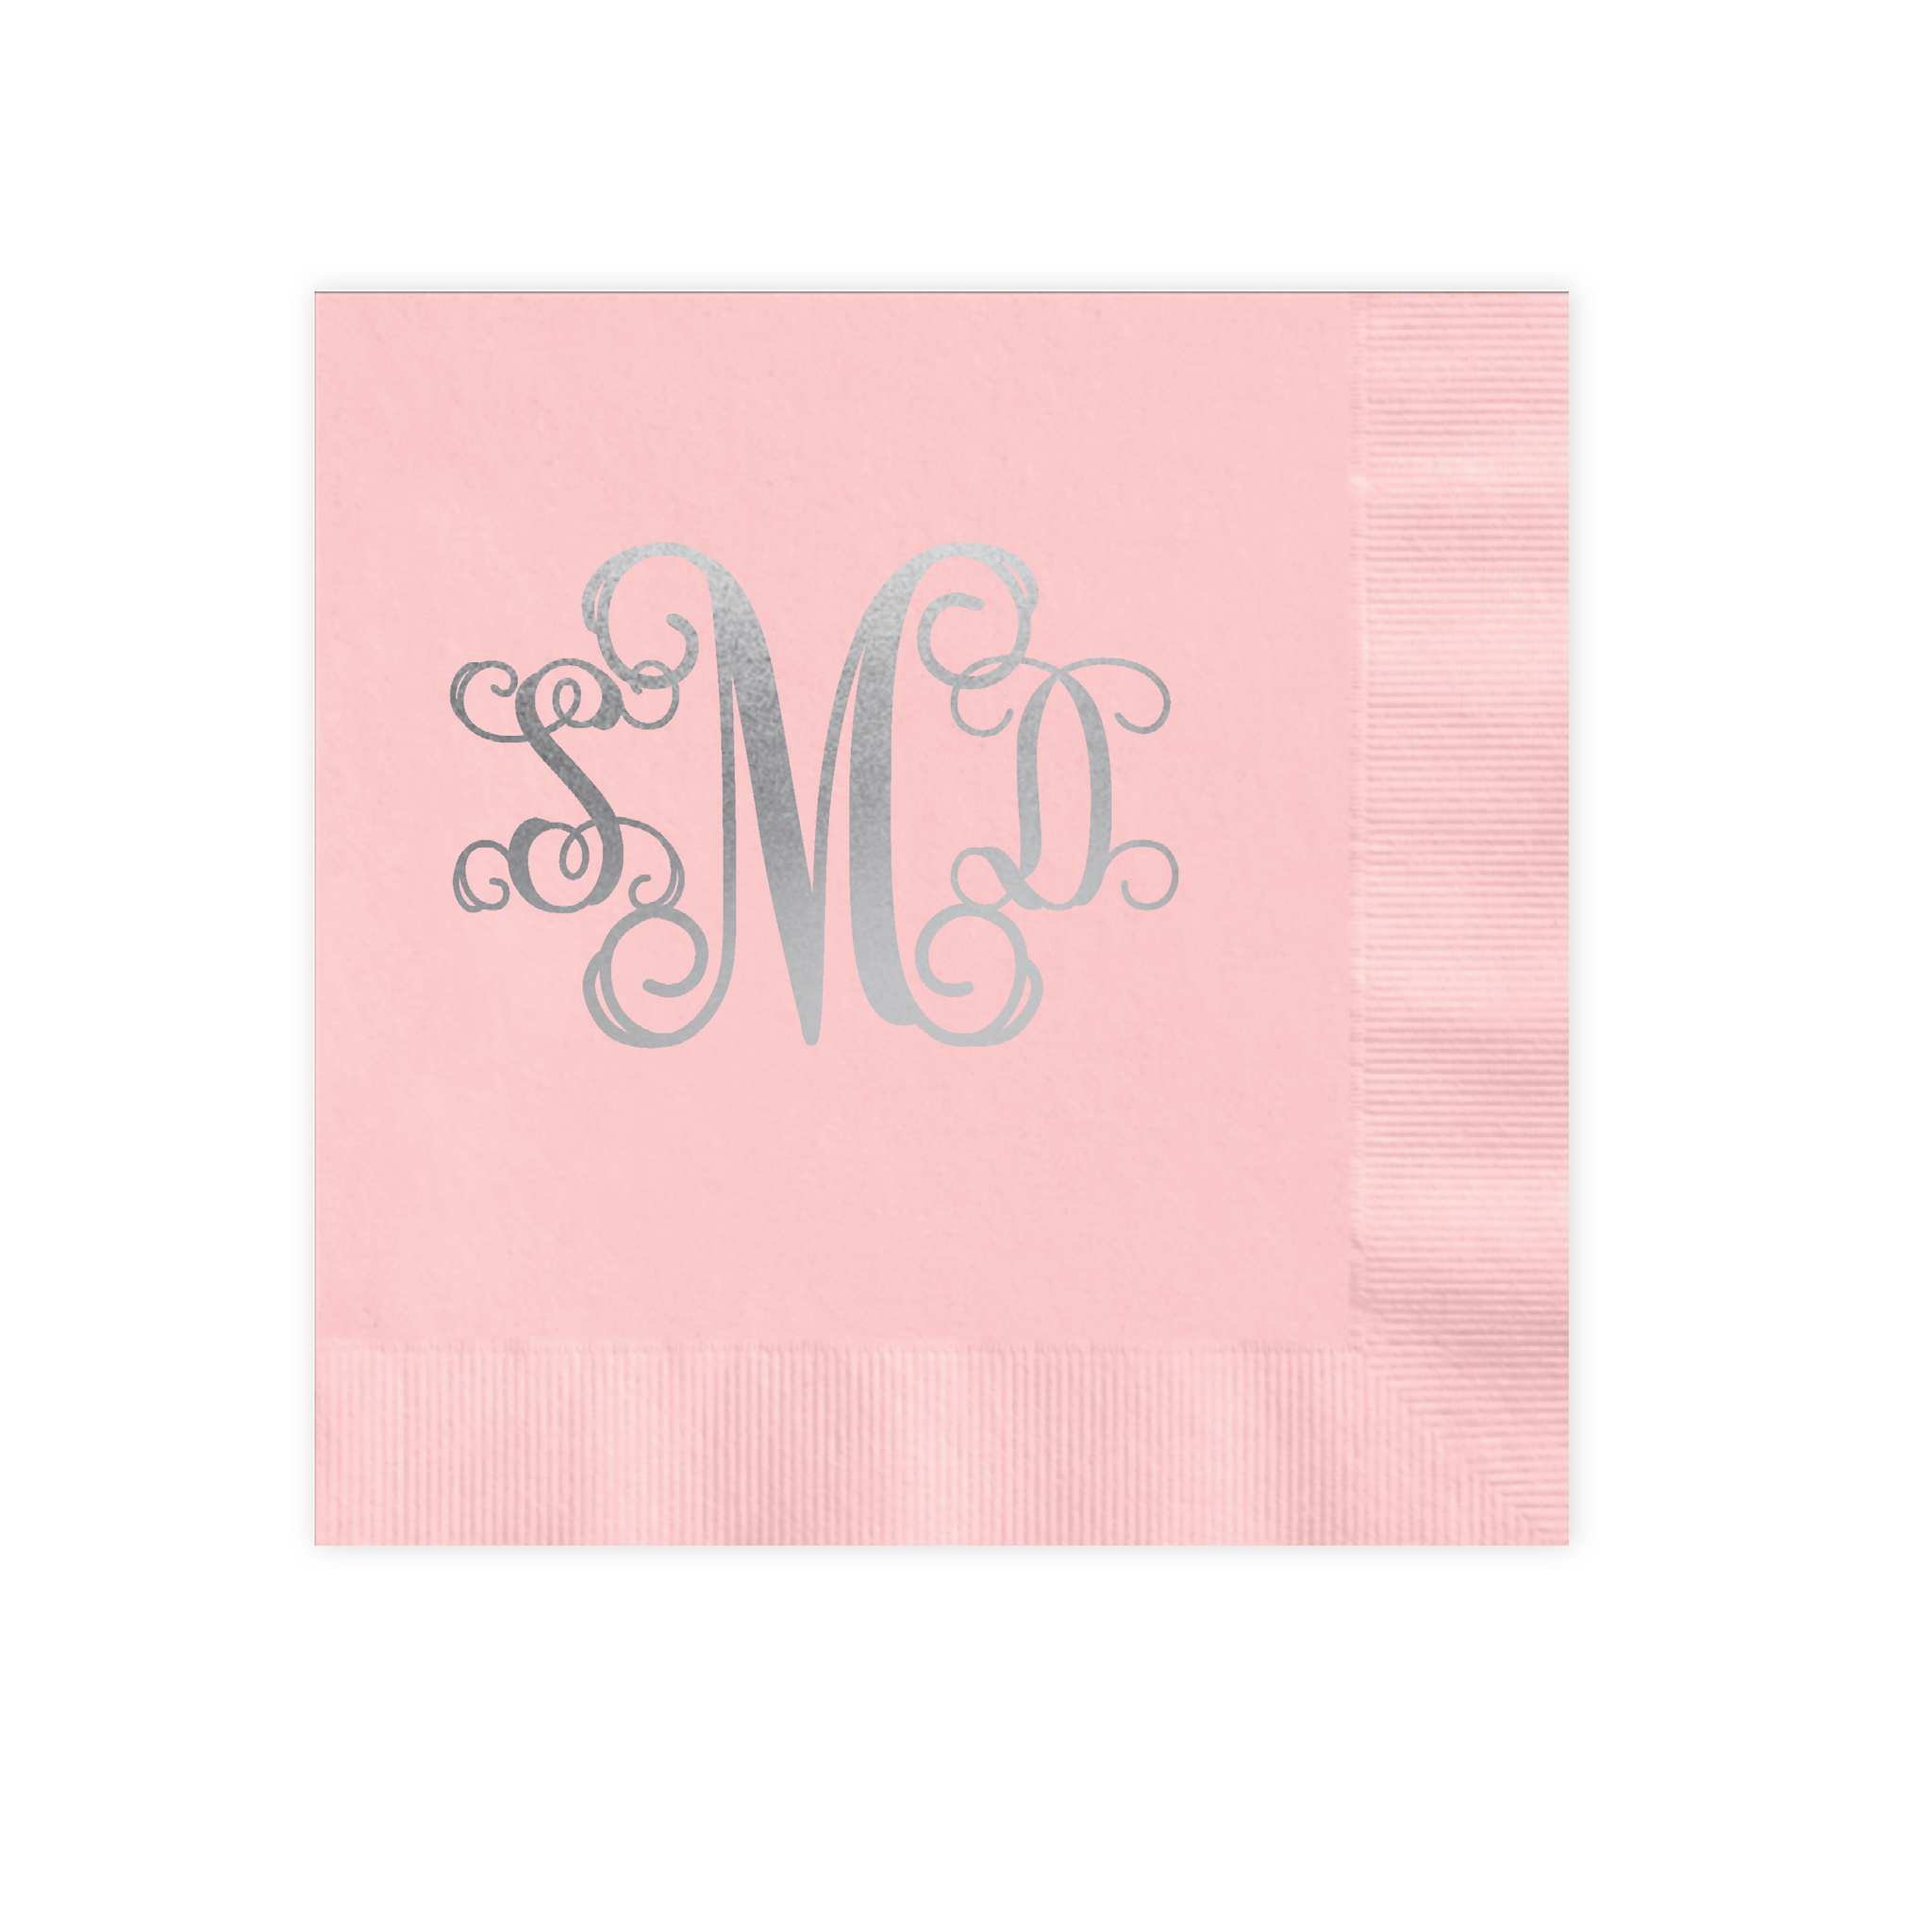 Vine Monogram Silver Foil Pink Luncheon Coined Napkin